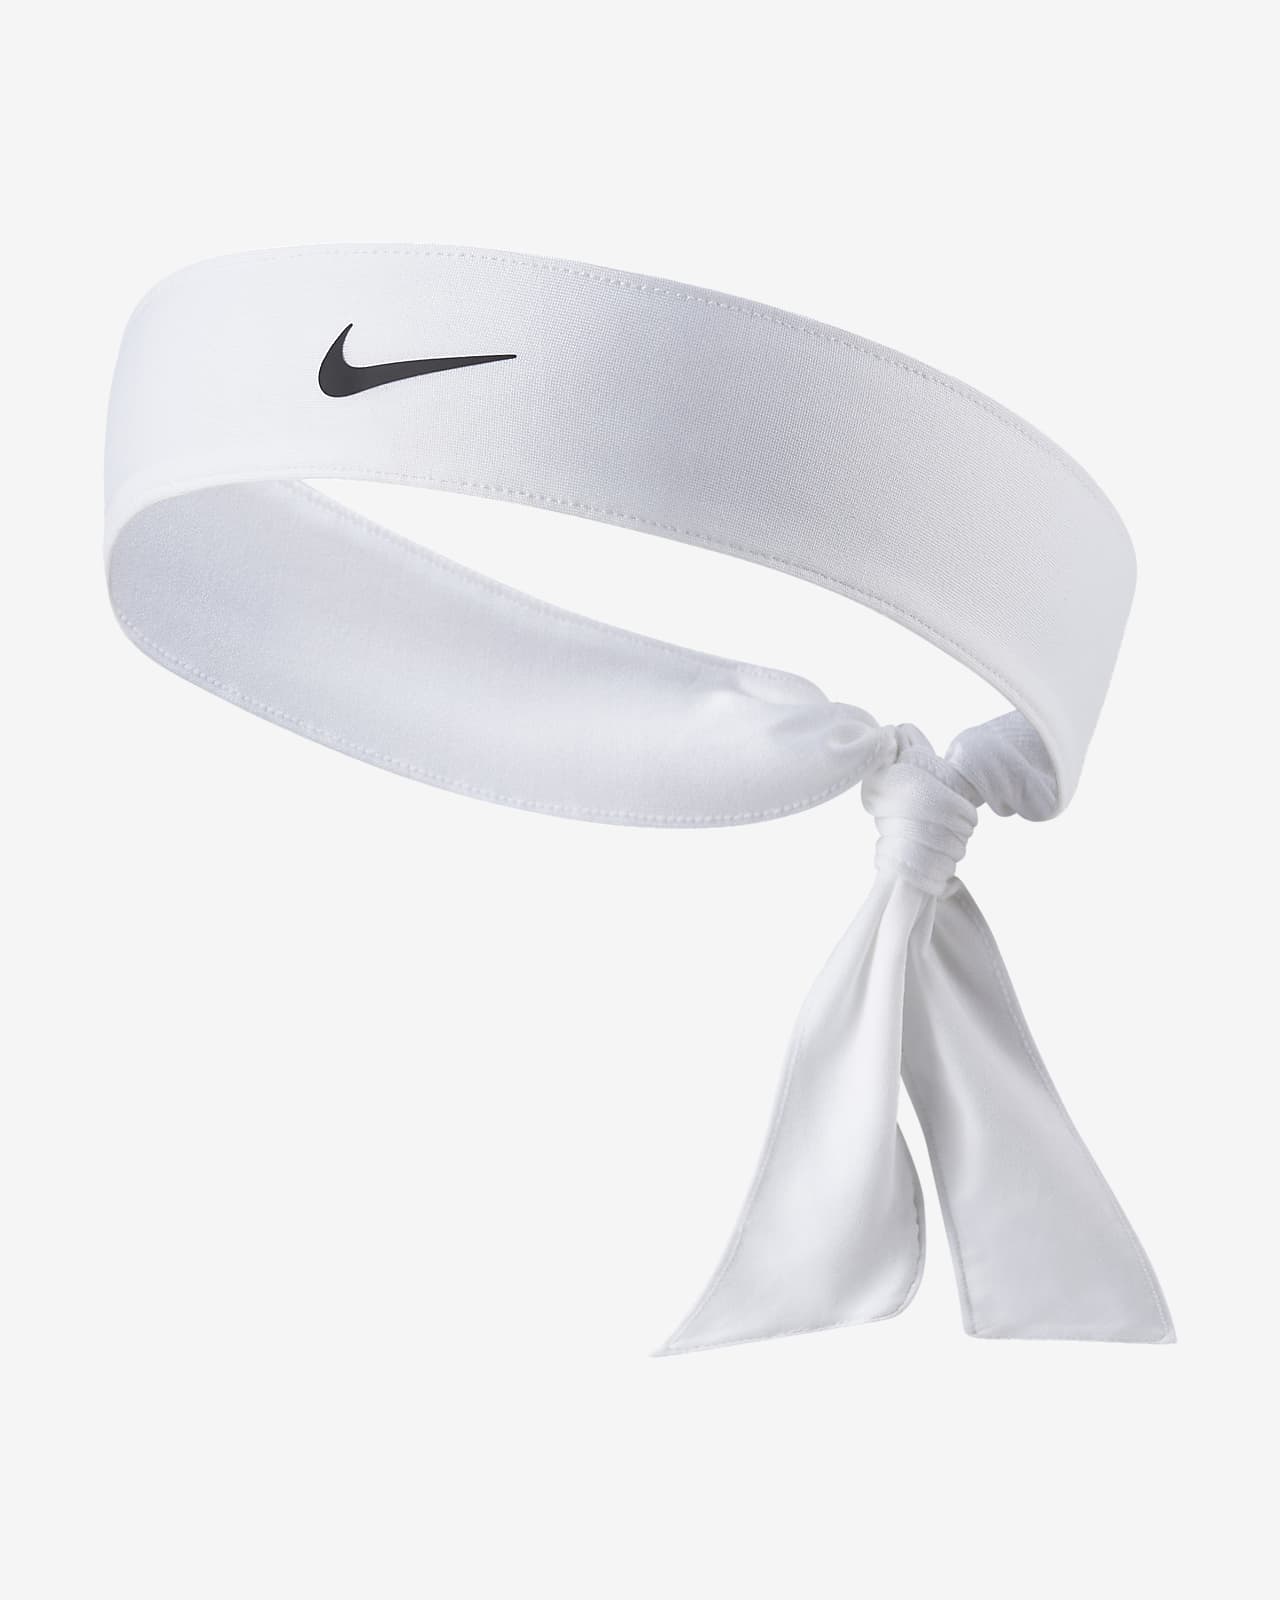 NikeCourt Women's Tennis Headband. GB